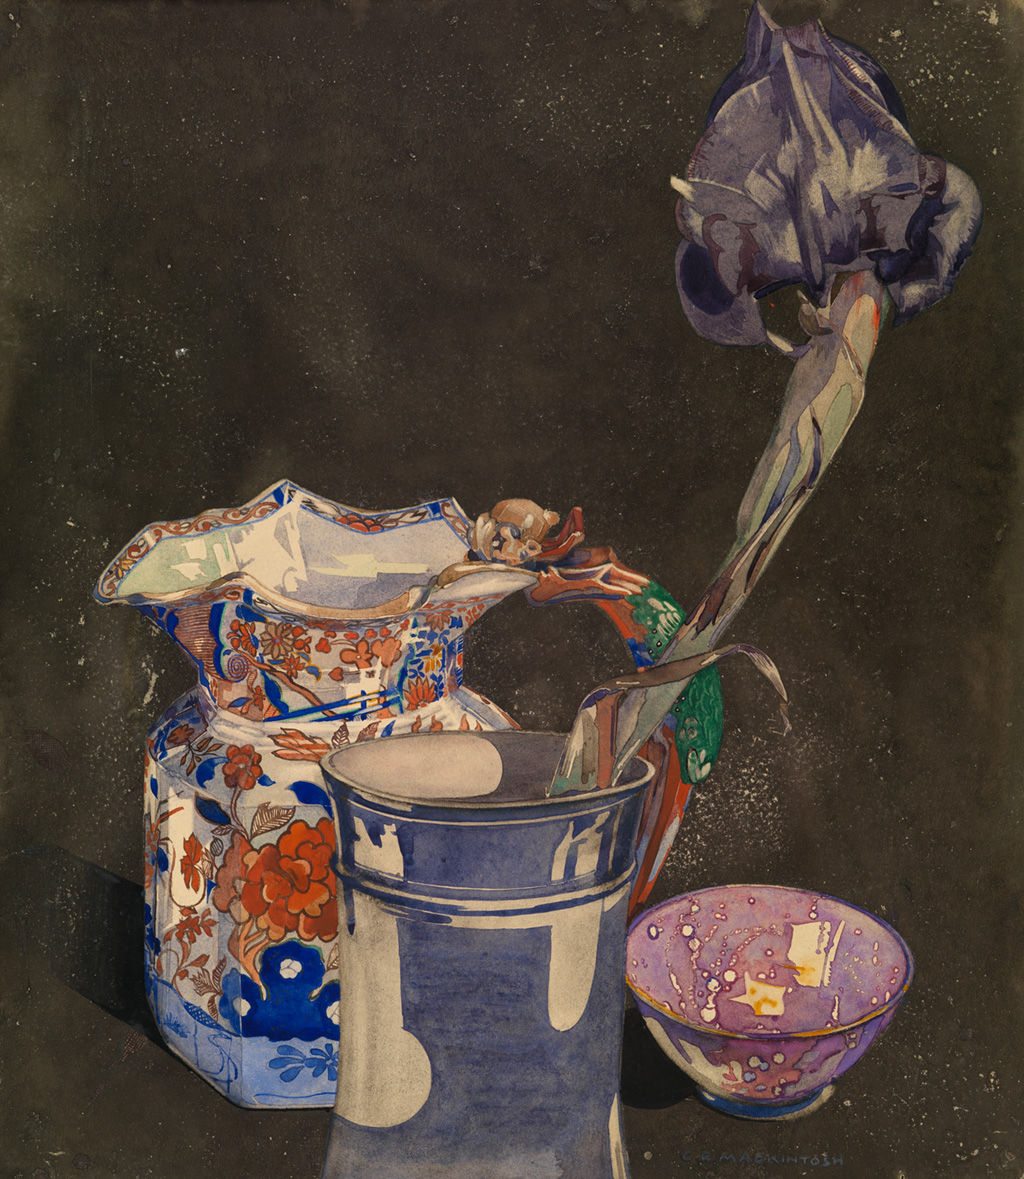 Grey Iris by Charles Rennie Mackintosh c. 1923 (Glasgow Museums). Grebe Place, Chelsea.